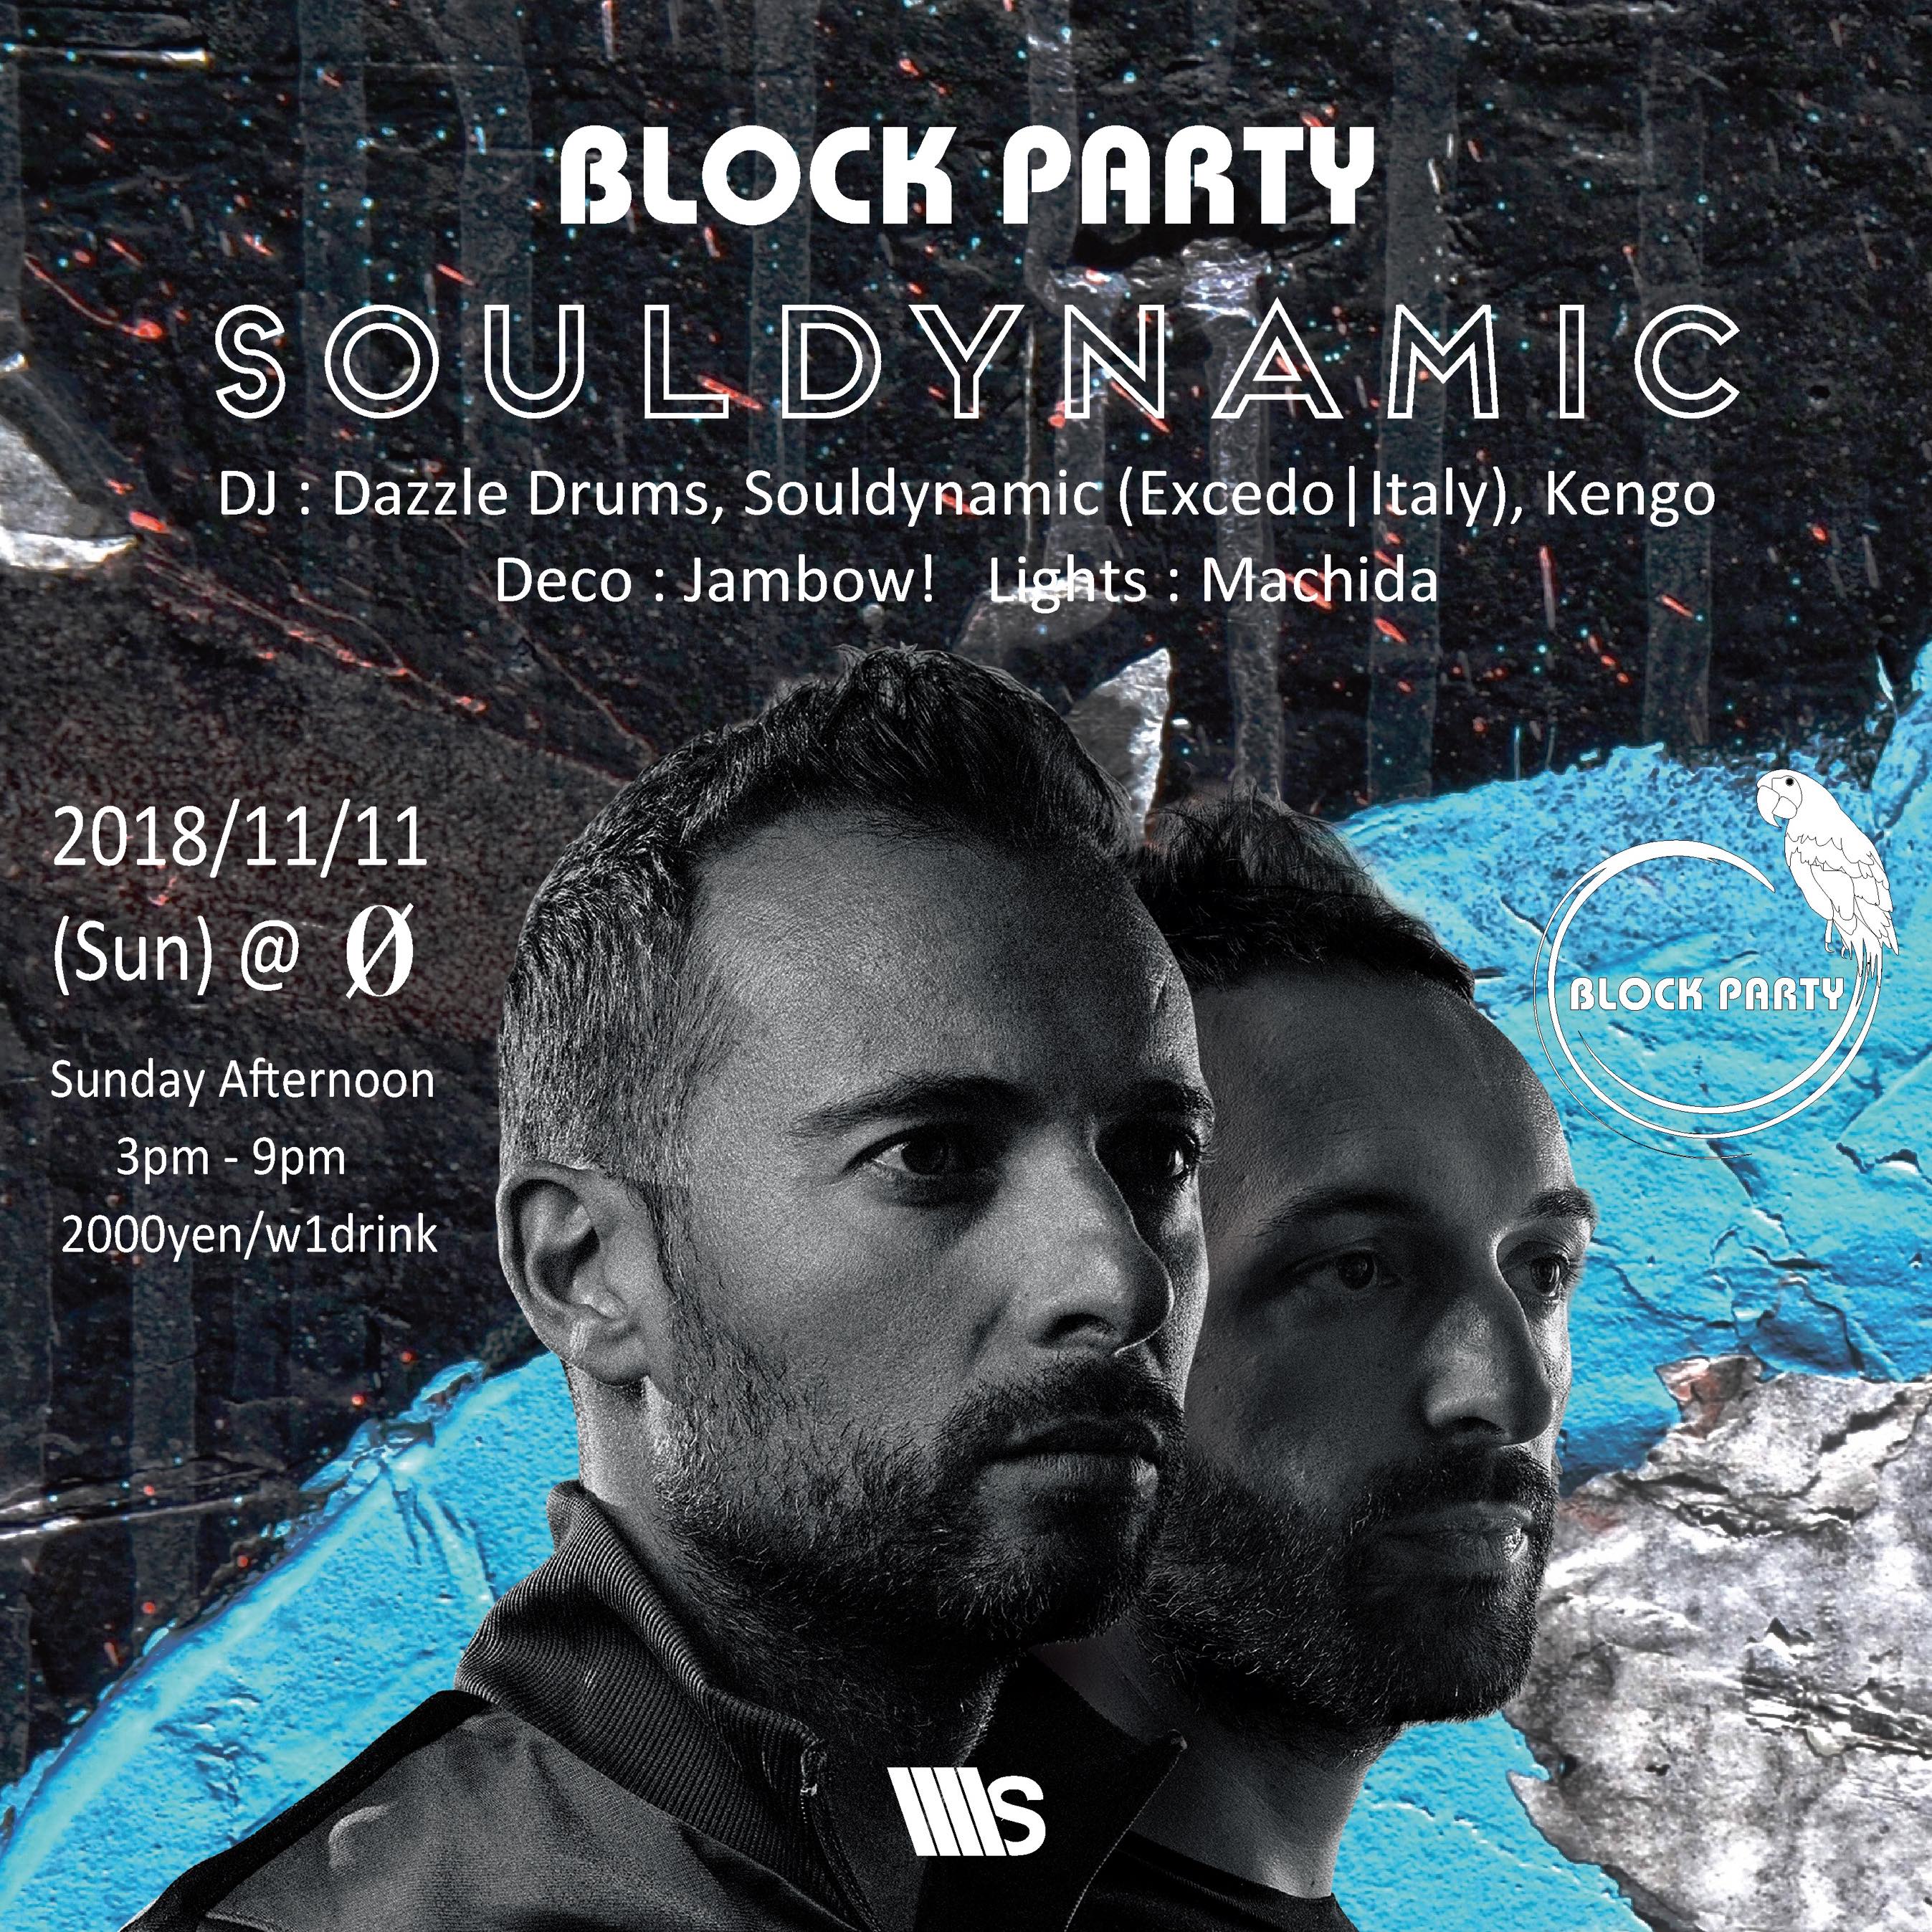 Block Party “Souldynamic”